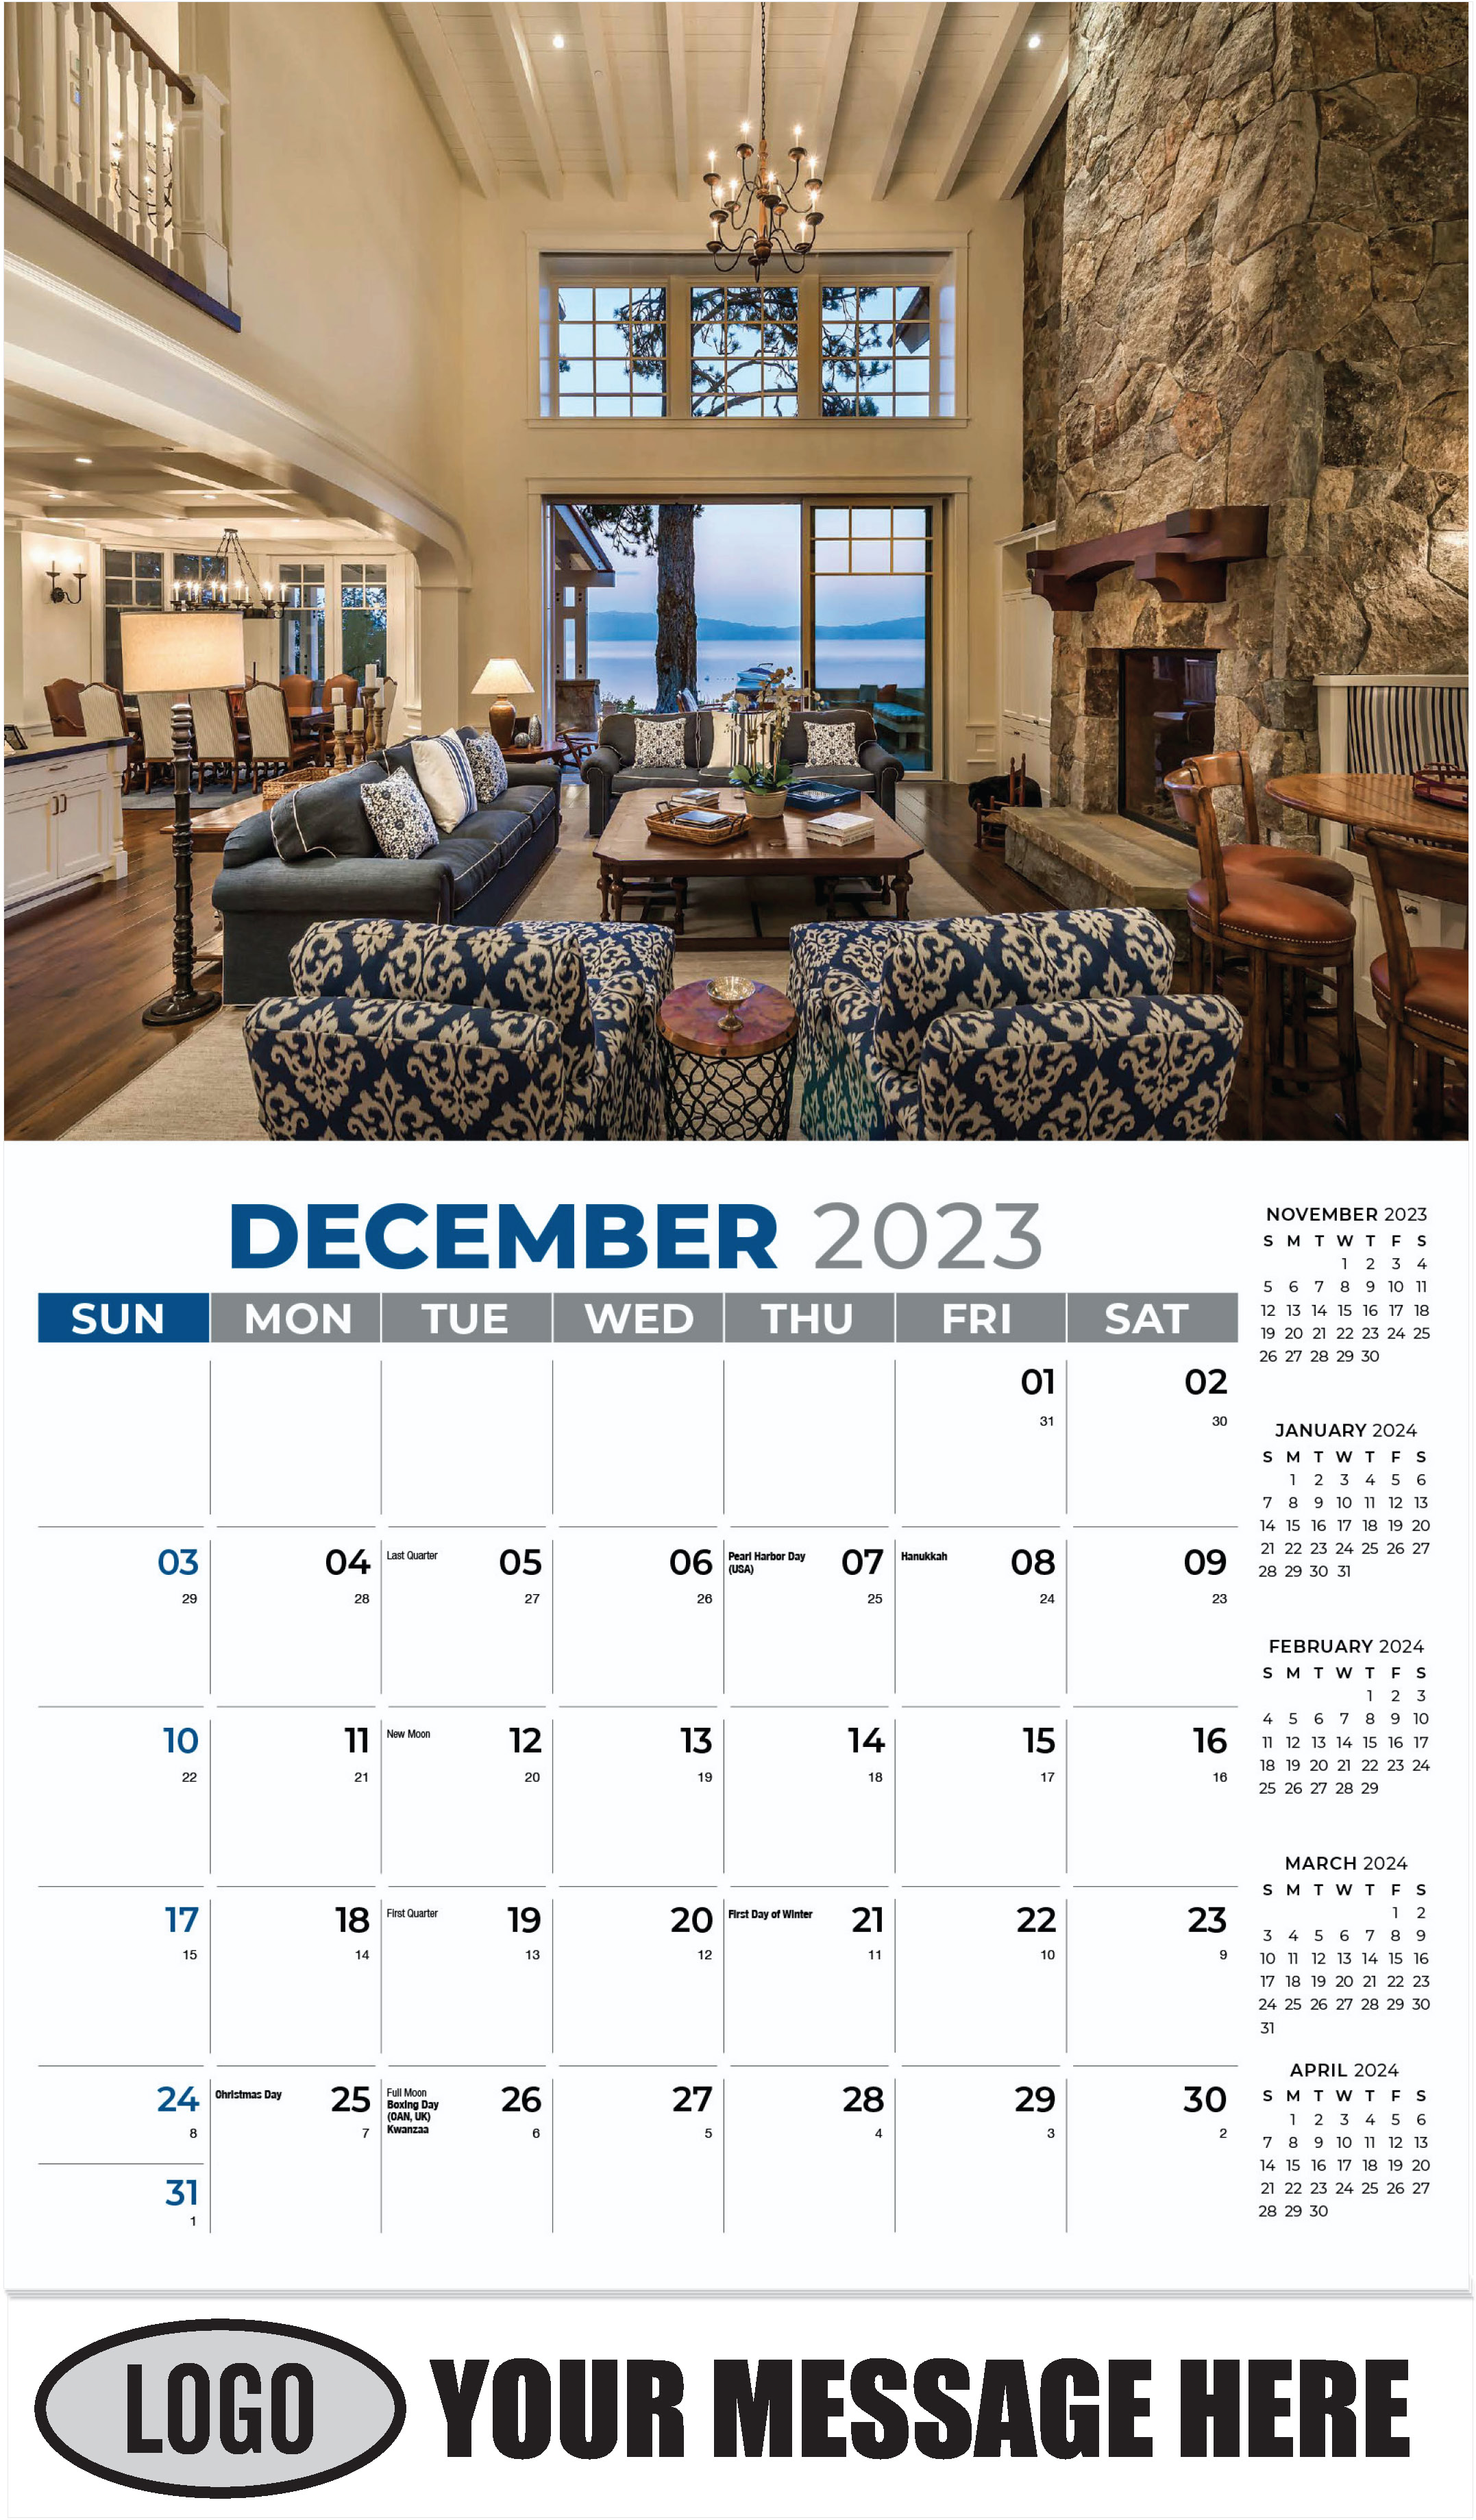 December 2023 - Décor & Design 2023 Promotional Calendar